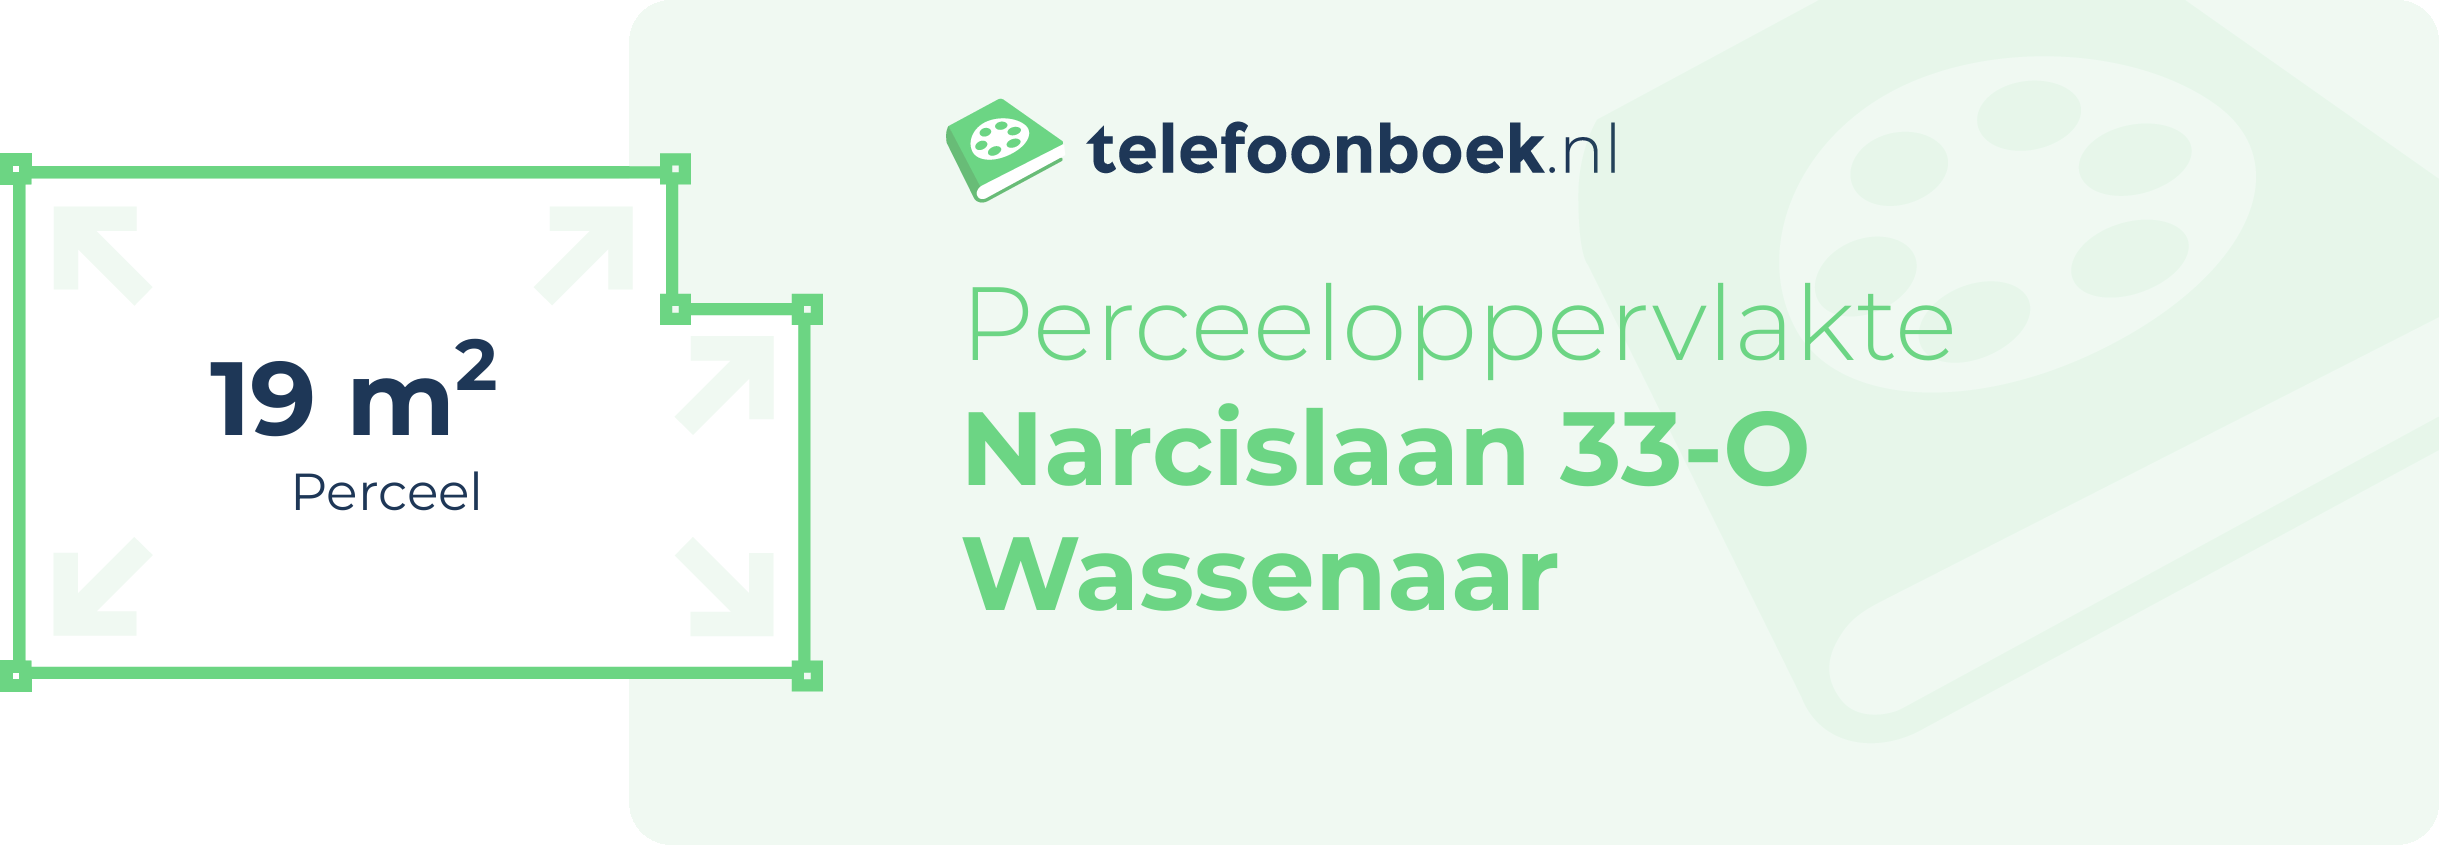 Perceeloppervlakte Narcislaan 33-O Wassenaar